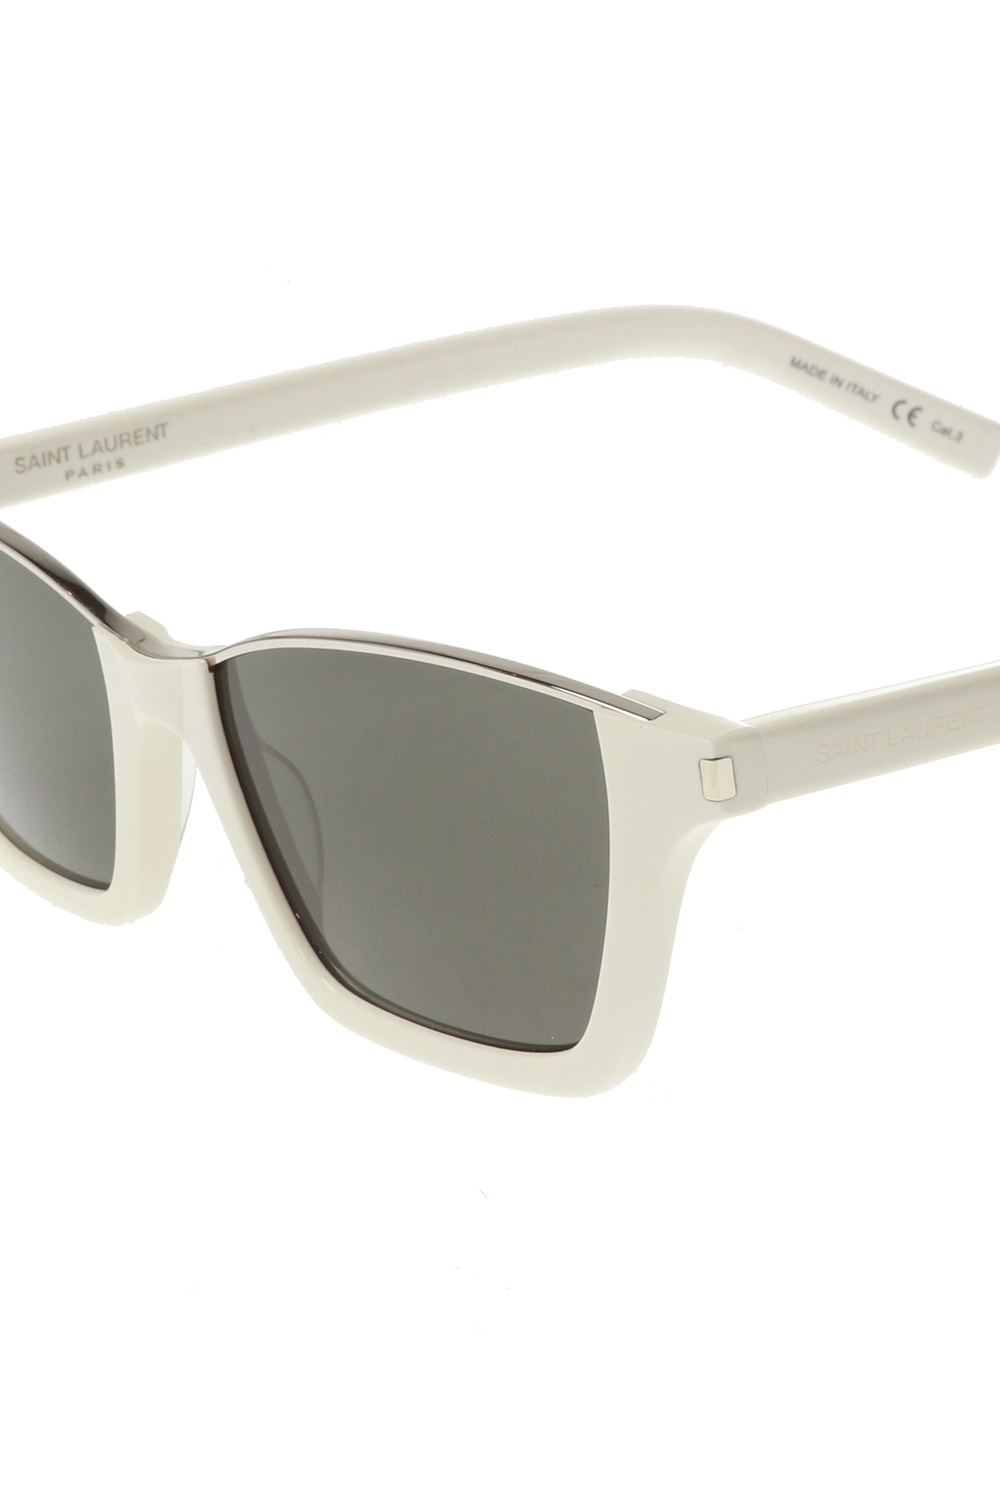 SL 365 Dylan' sunglasses Saint Laurent - Vitkac GB